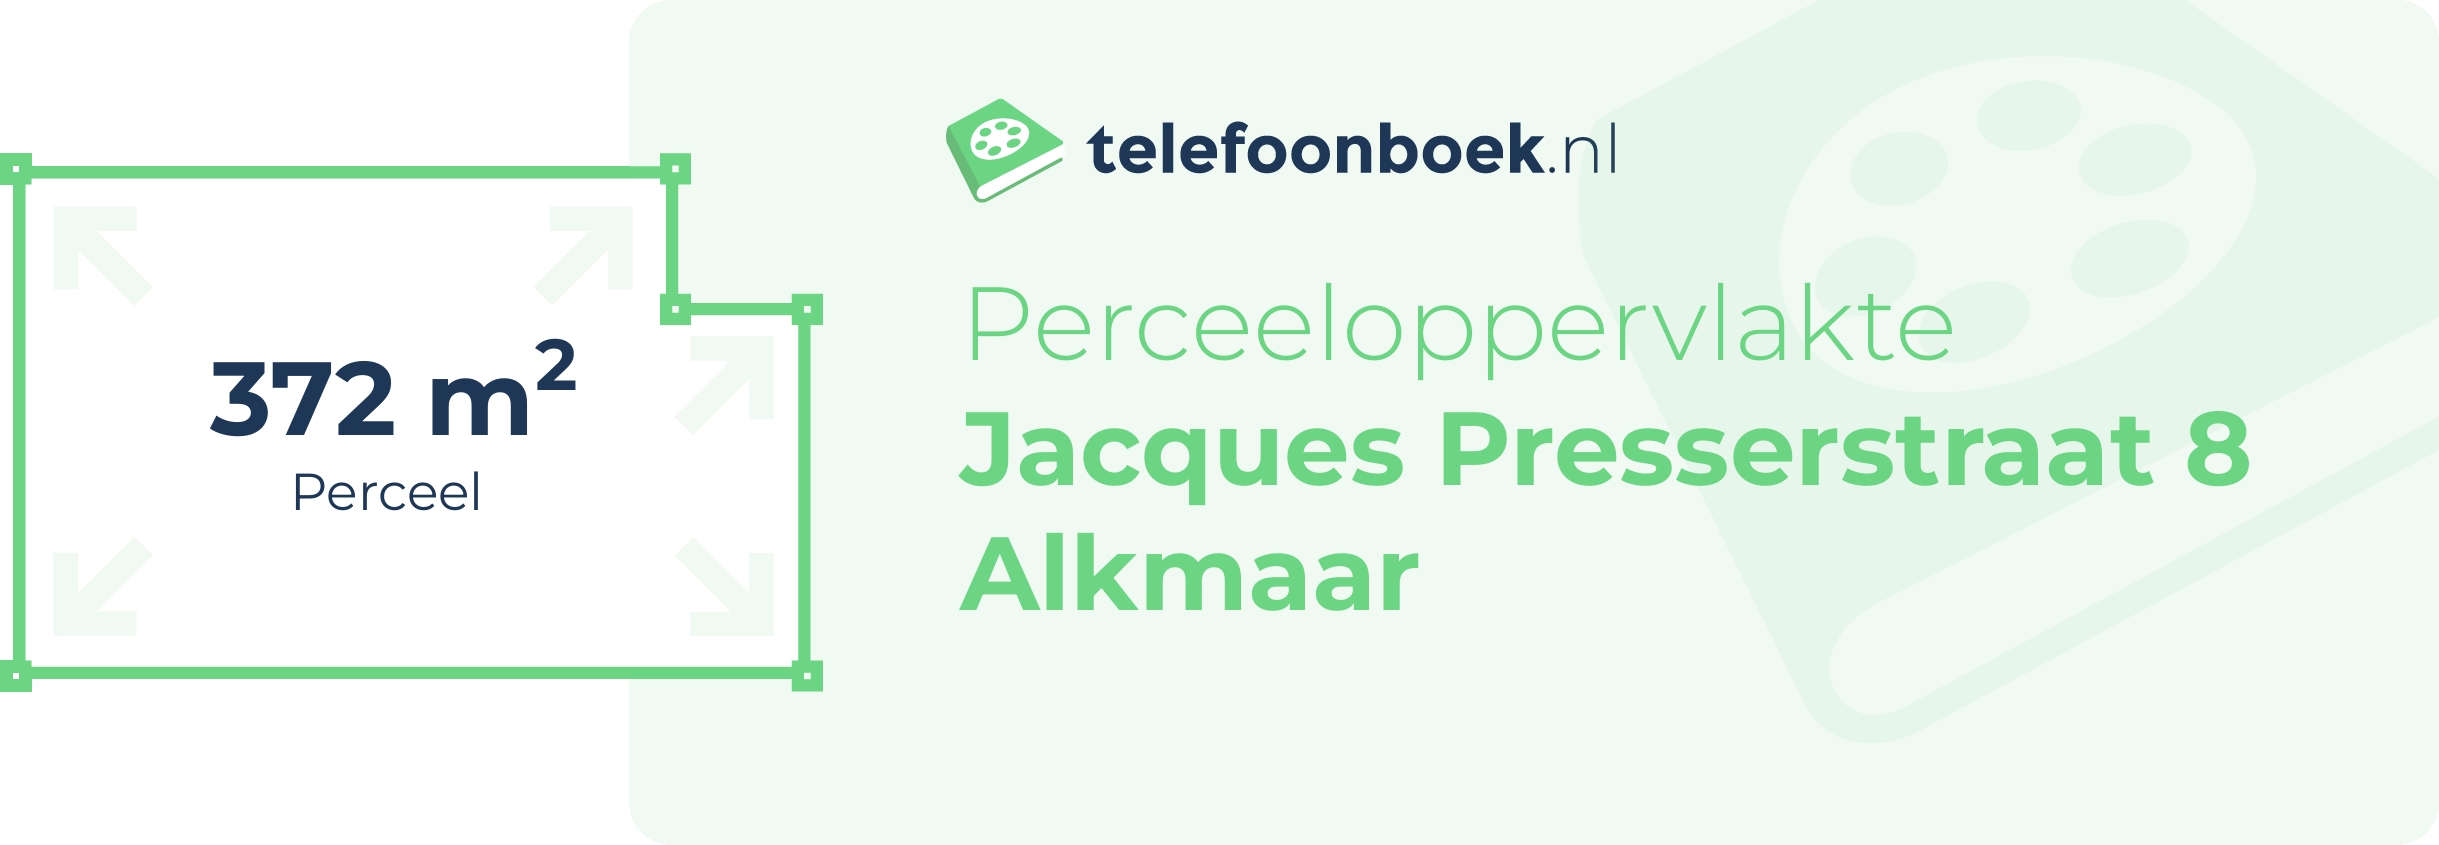 Perceeloppervlakte Jacques Presserstraat 8 Alkmaar